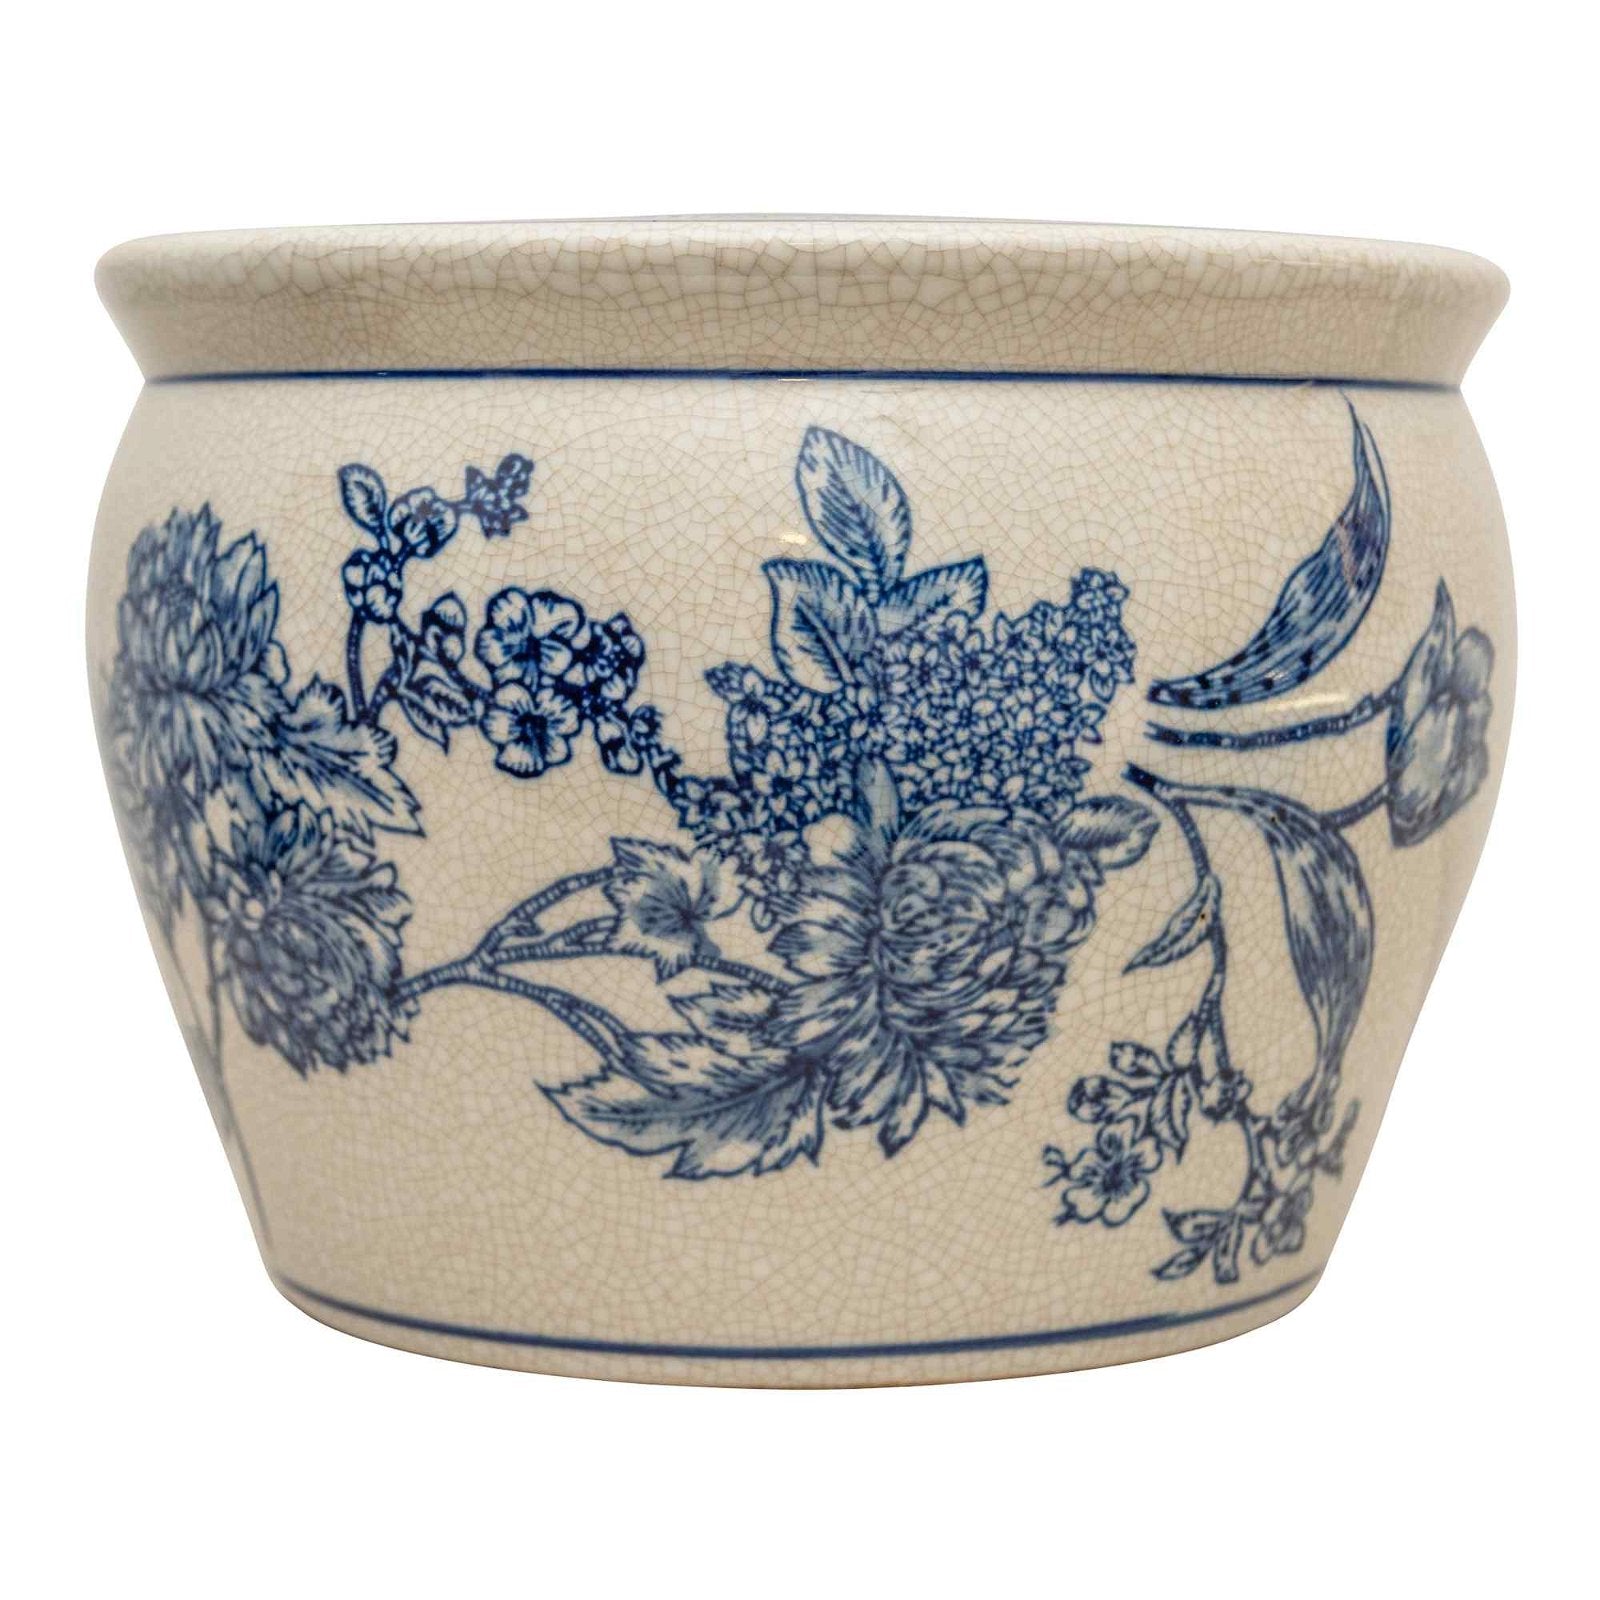 Oia Blue & White Floral Crackle Glazed Ceramic Planter